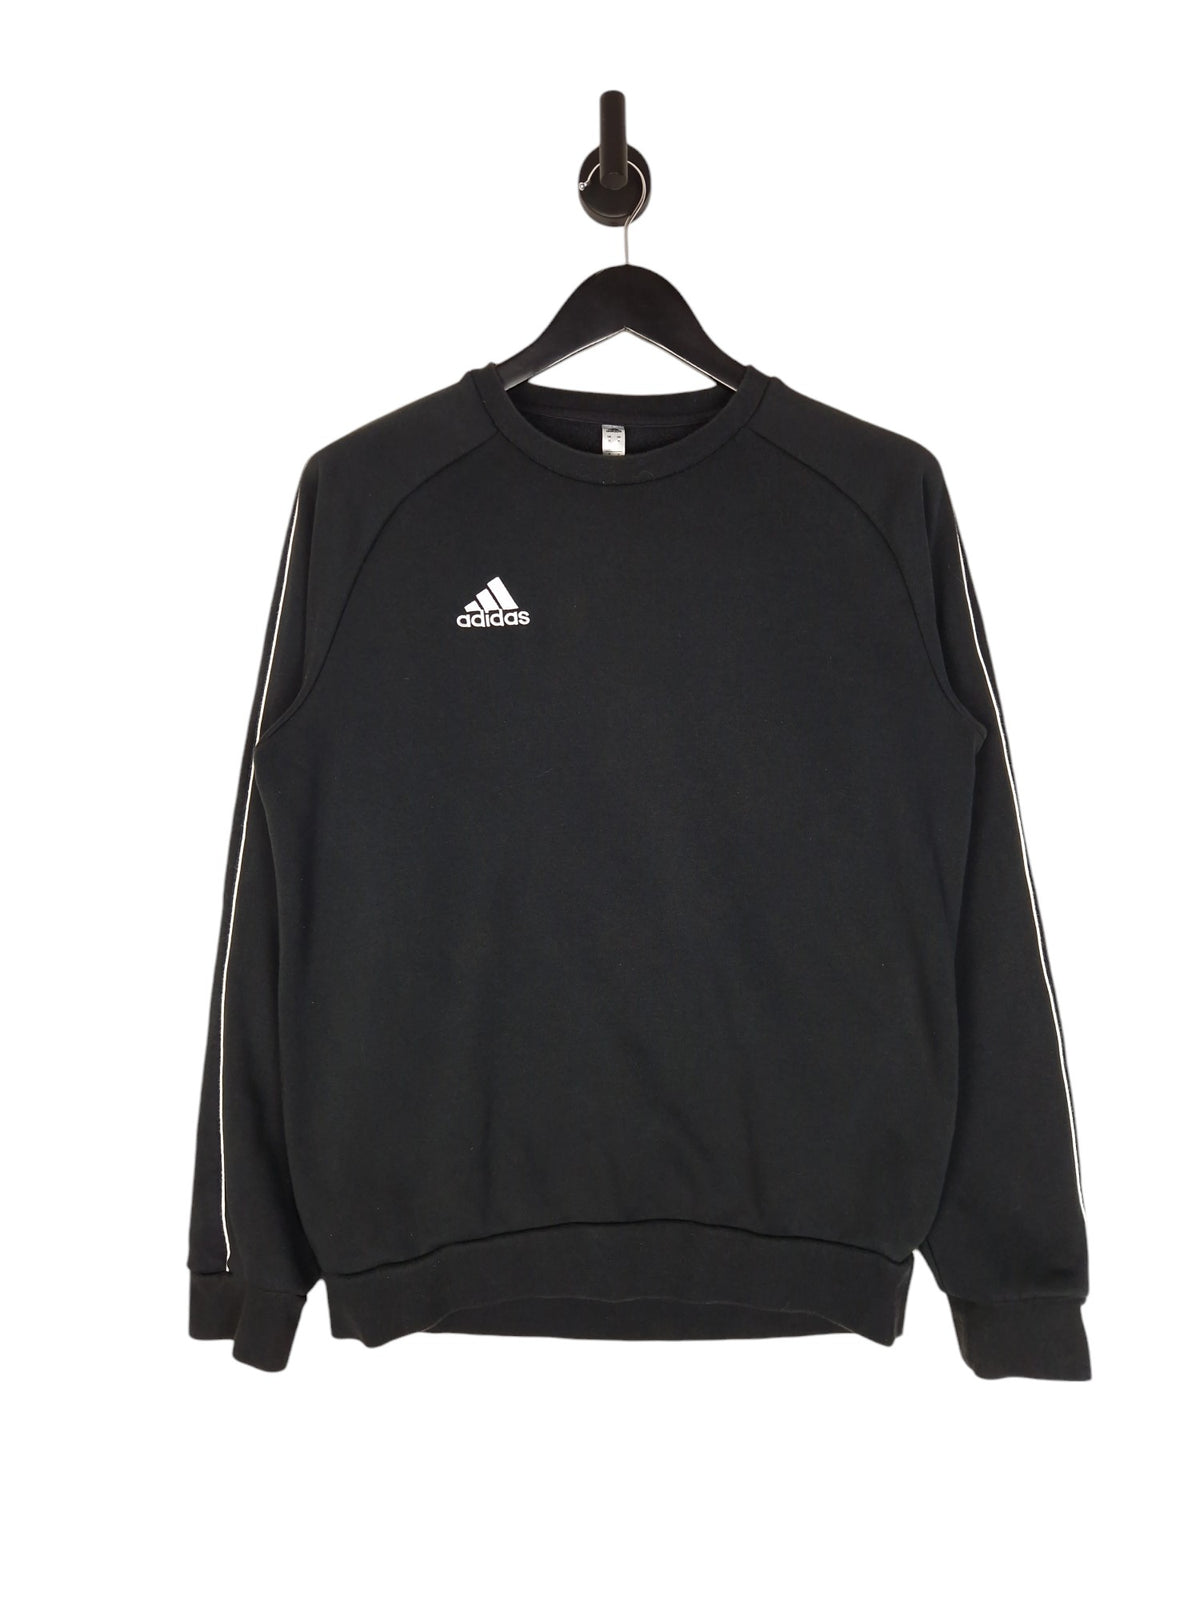 Adidas Small Logo Sweatshirt - Size Small